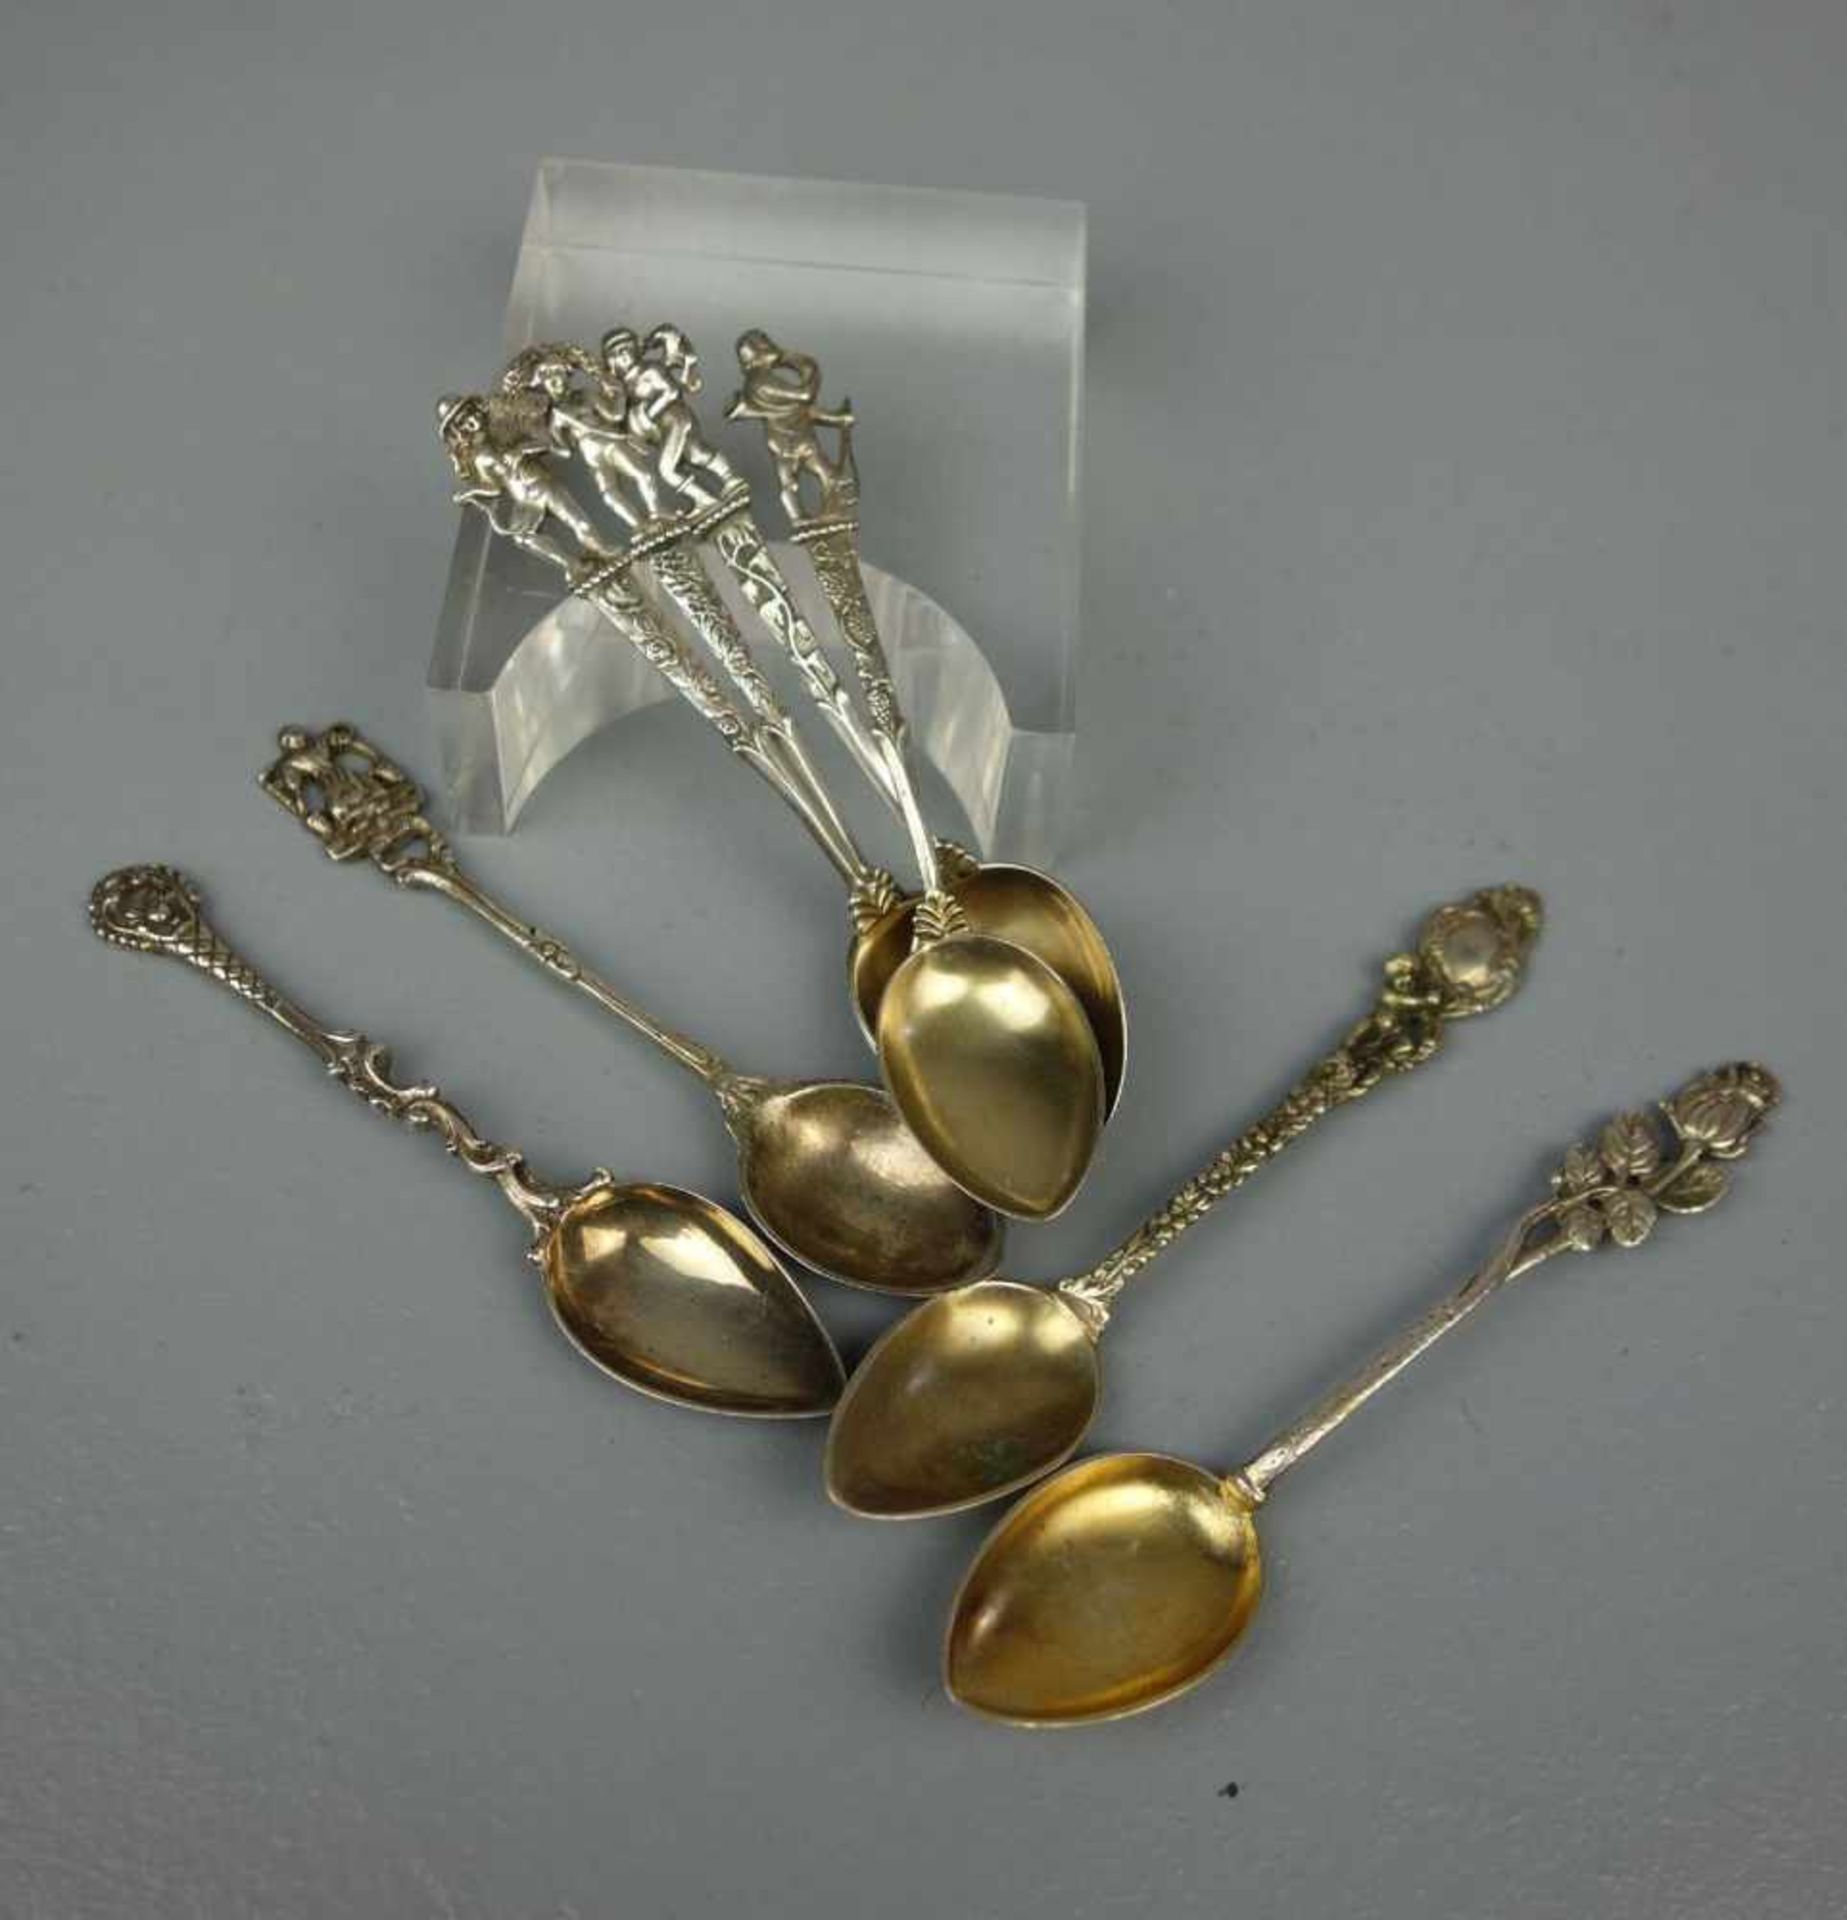 8 KLEINE LÖFFEL / MOKKALÖFFEL / mocha spoons, 20. Jh., Silber, Laffen partiell mit Restvergoldung.